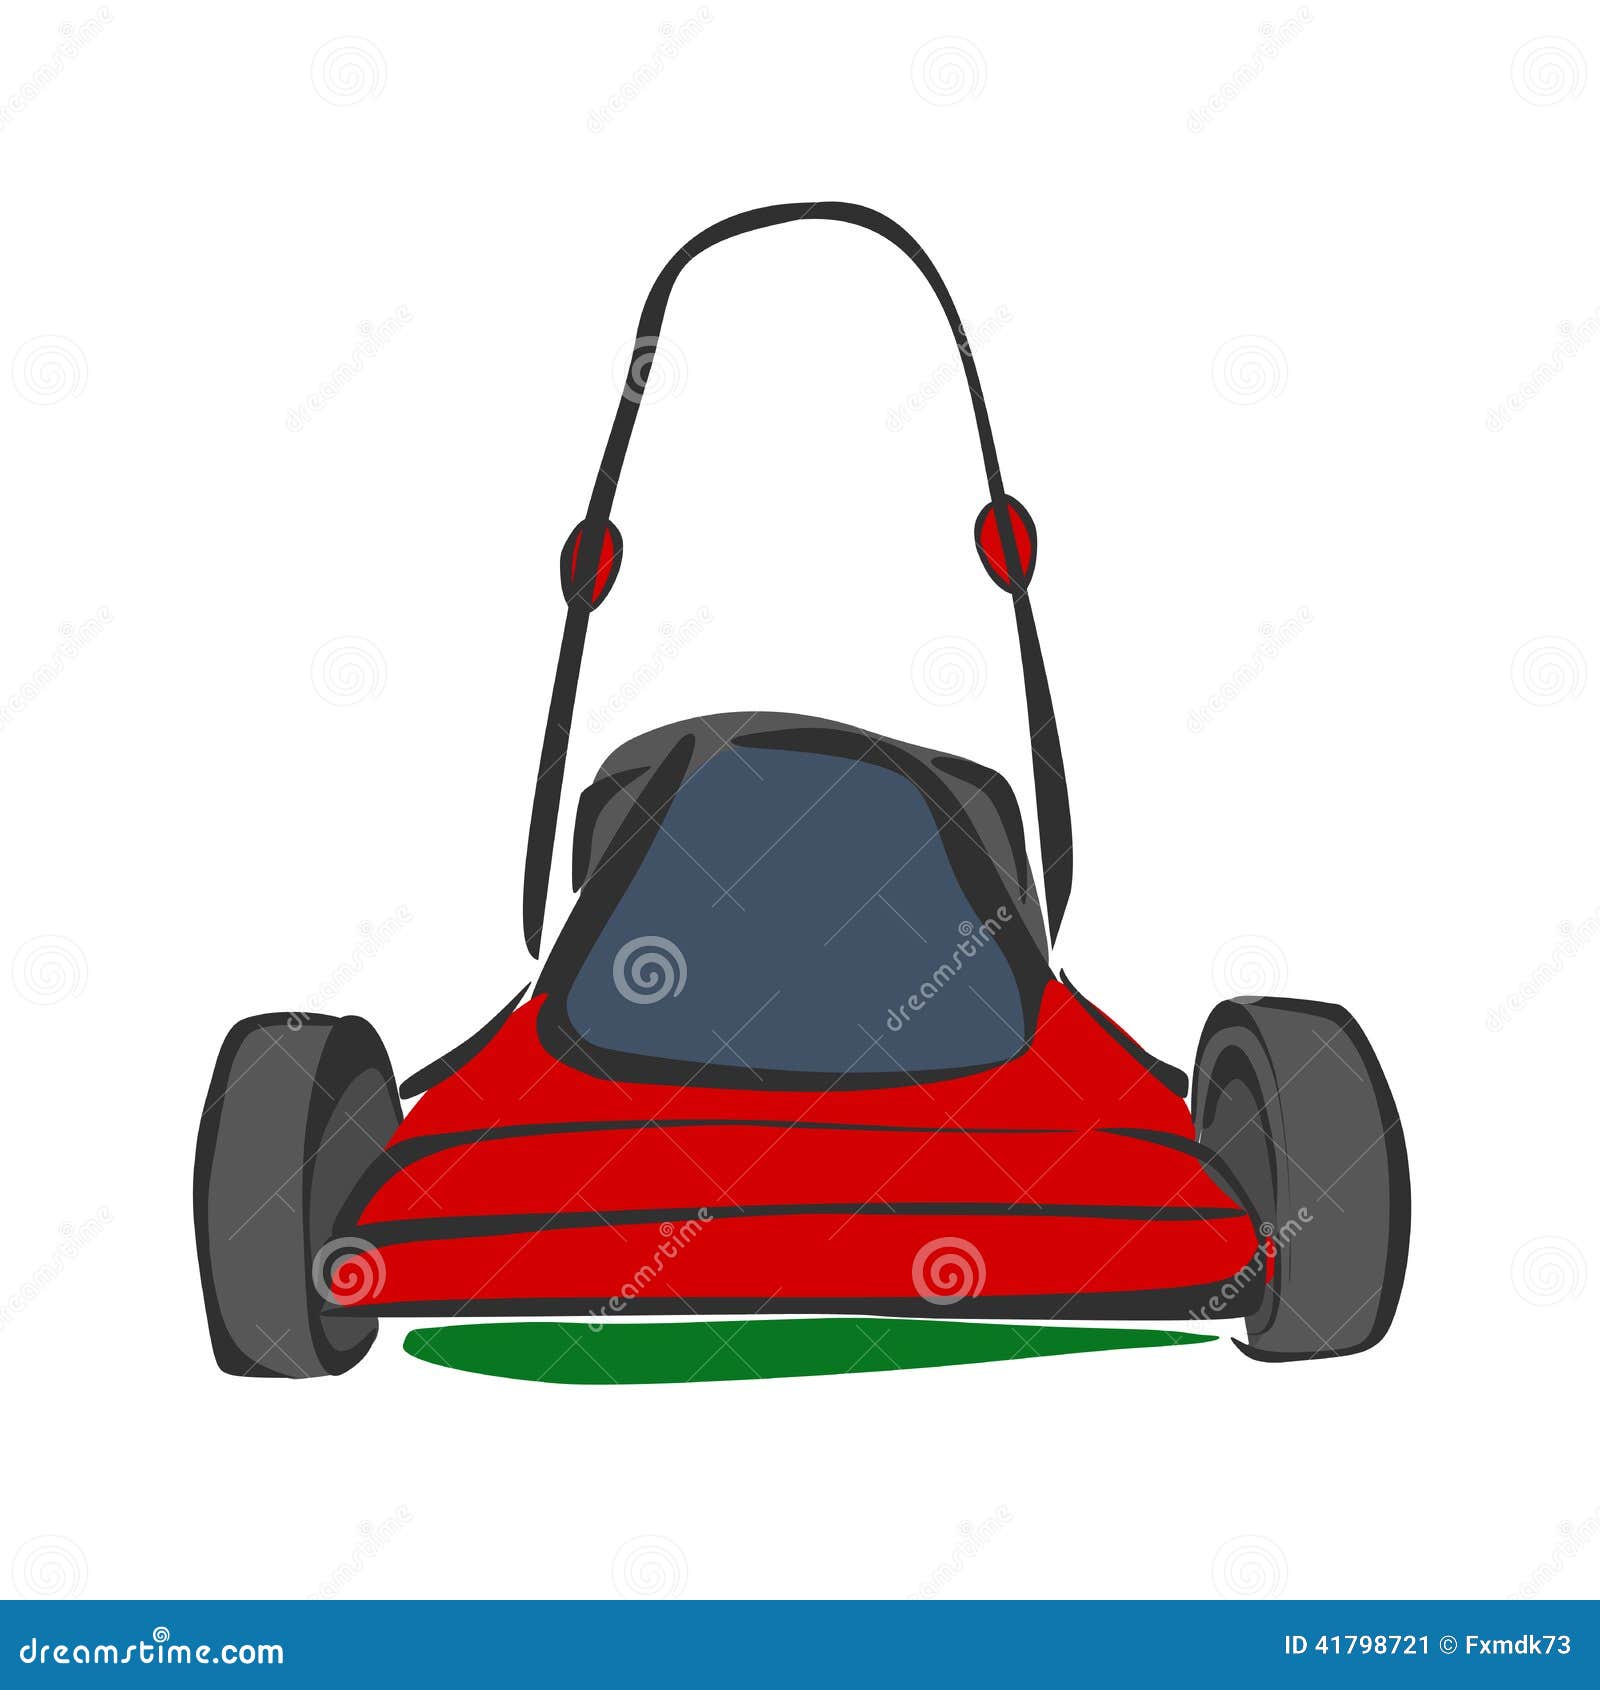 270 Lawn Mowing Drawing Illustrations RoyaltyFree Vector Graphics  Clip  Art  iStock